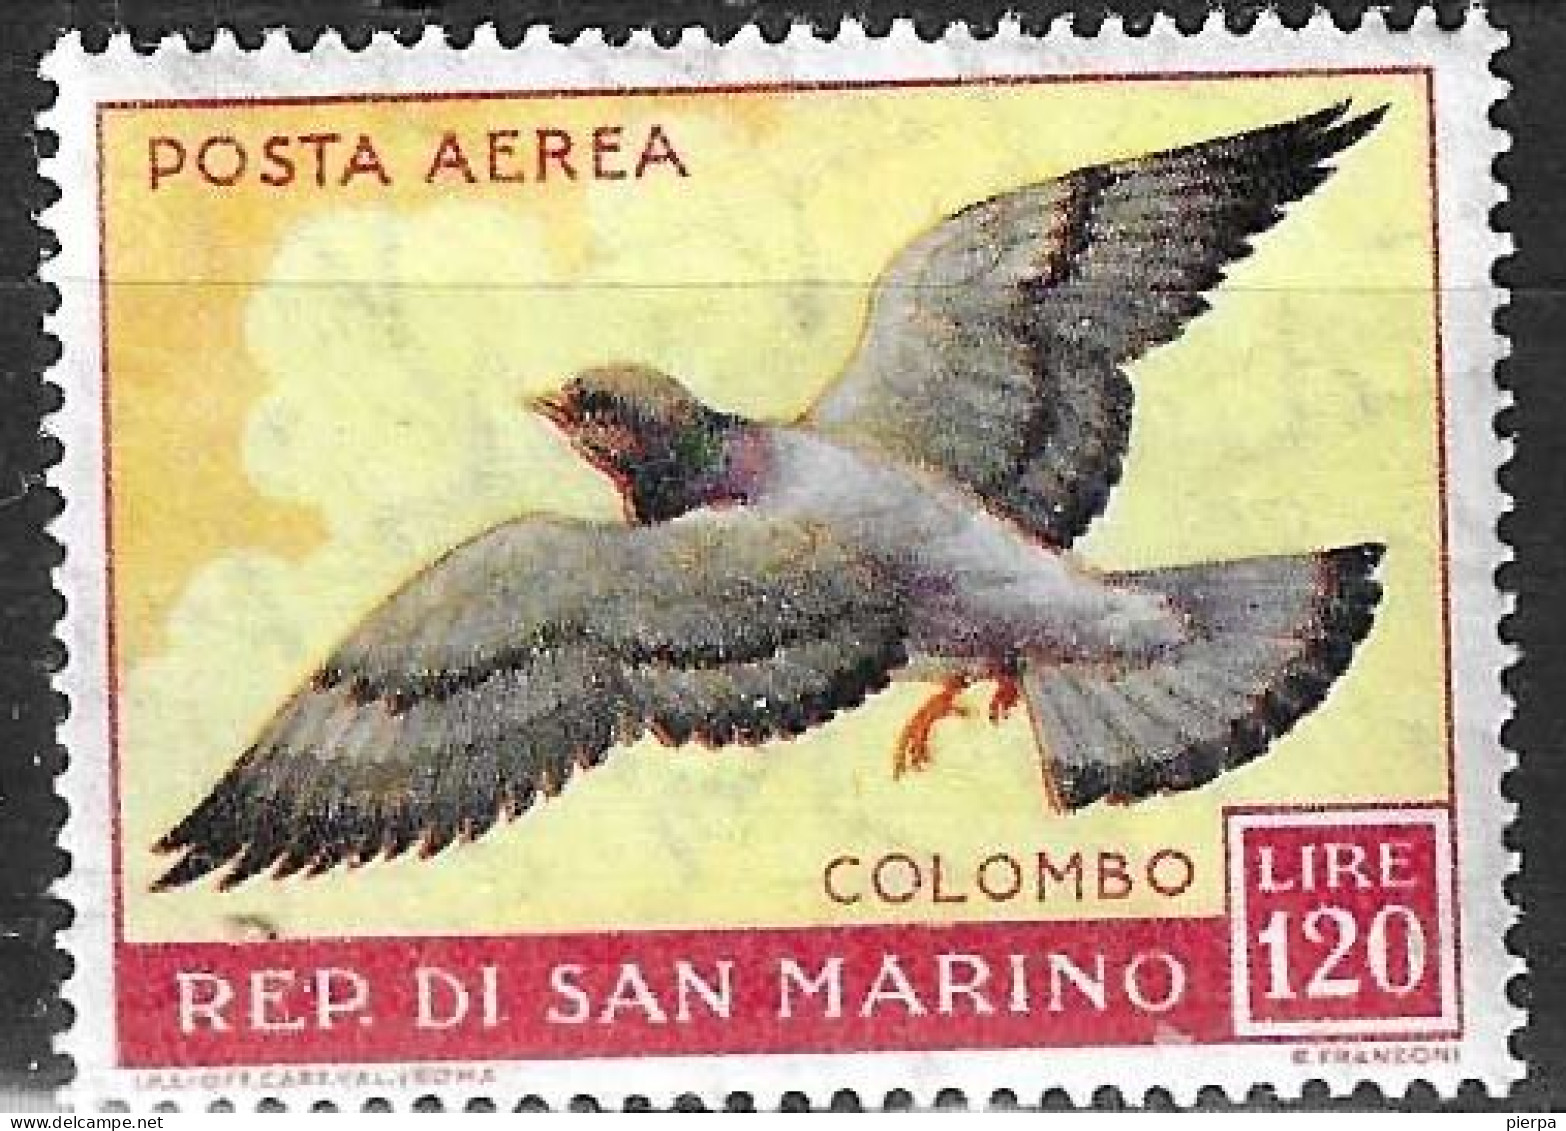 SAN MARINO -1959 - P. AEREA - COLOMBO - LIRE 120- NUOVO -MNH** ( YVERT AV 114- MICHEL 609- SS A 125) - Poste Aérienne